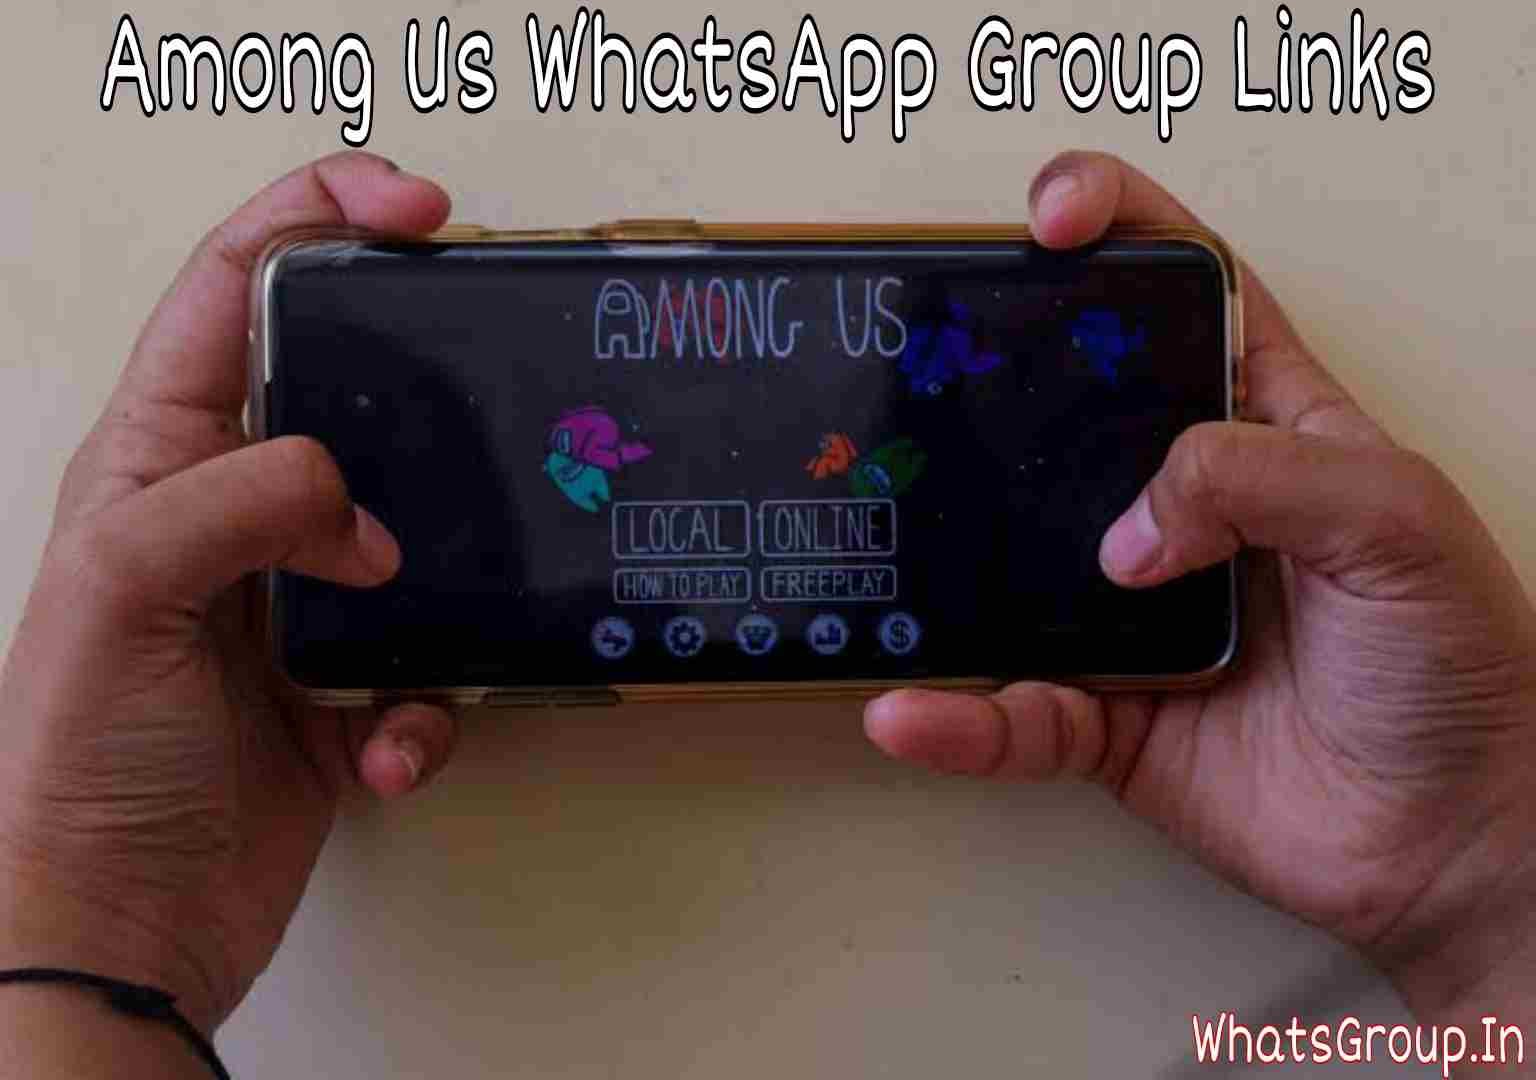 Among Us WhatsApp Group Links